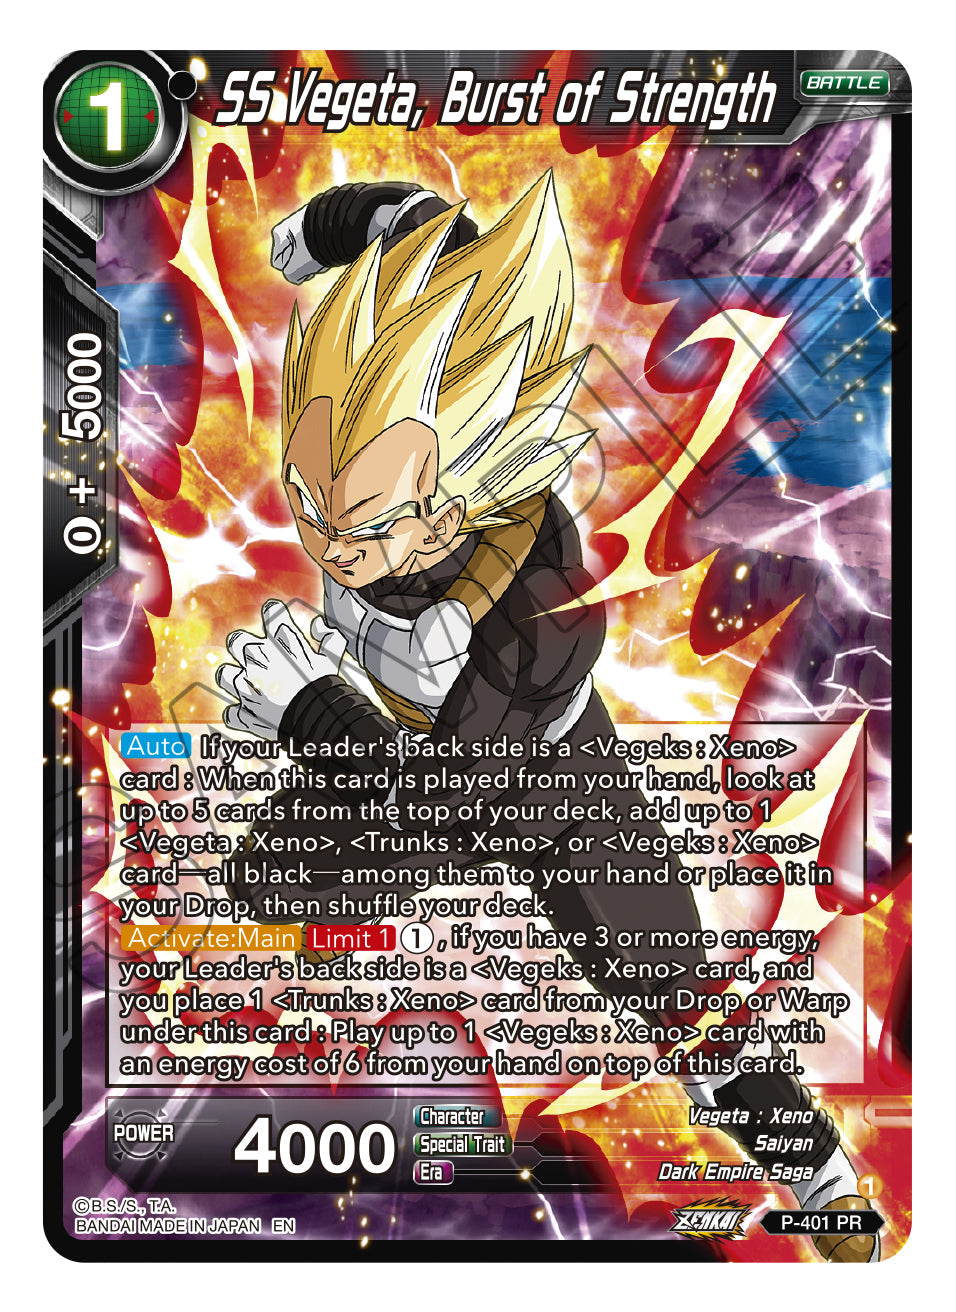 SS Vegeta, Burst of Strength - Promotion Cards - Promo - P-401